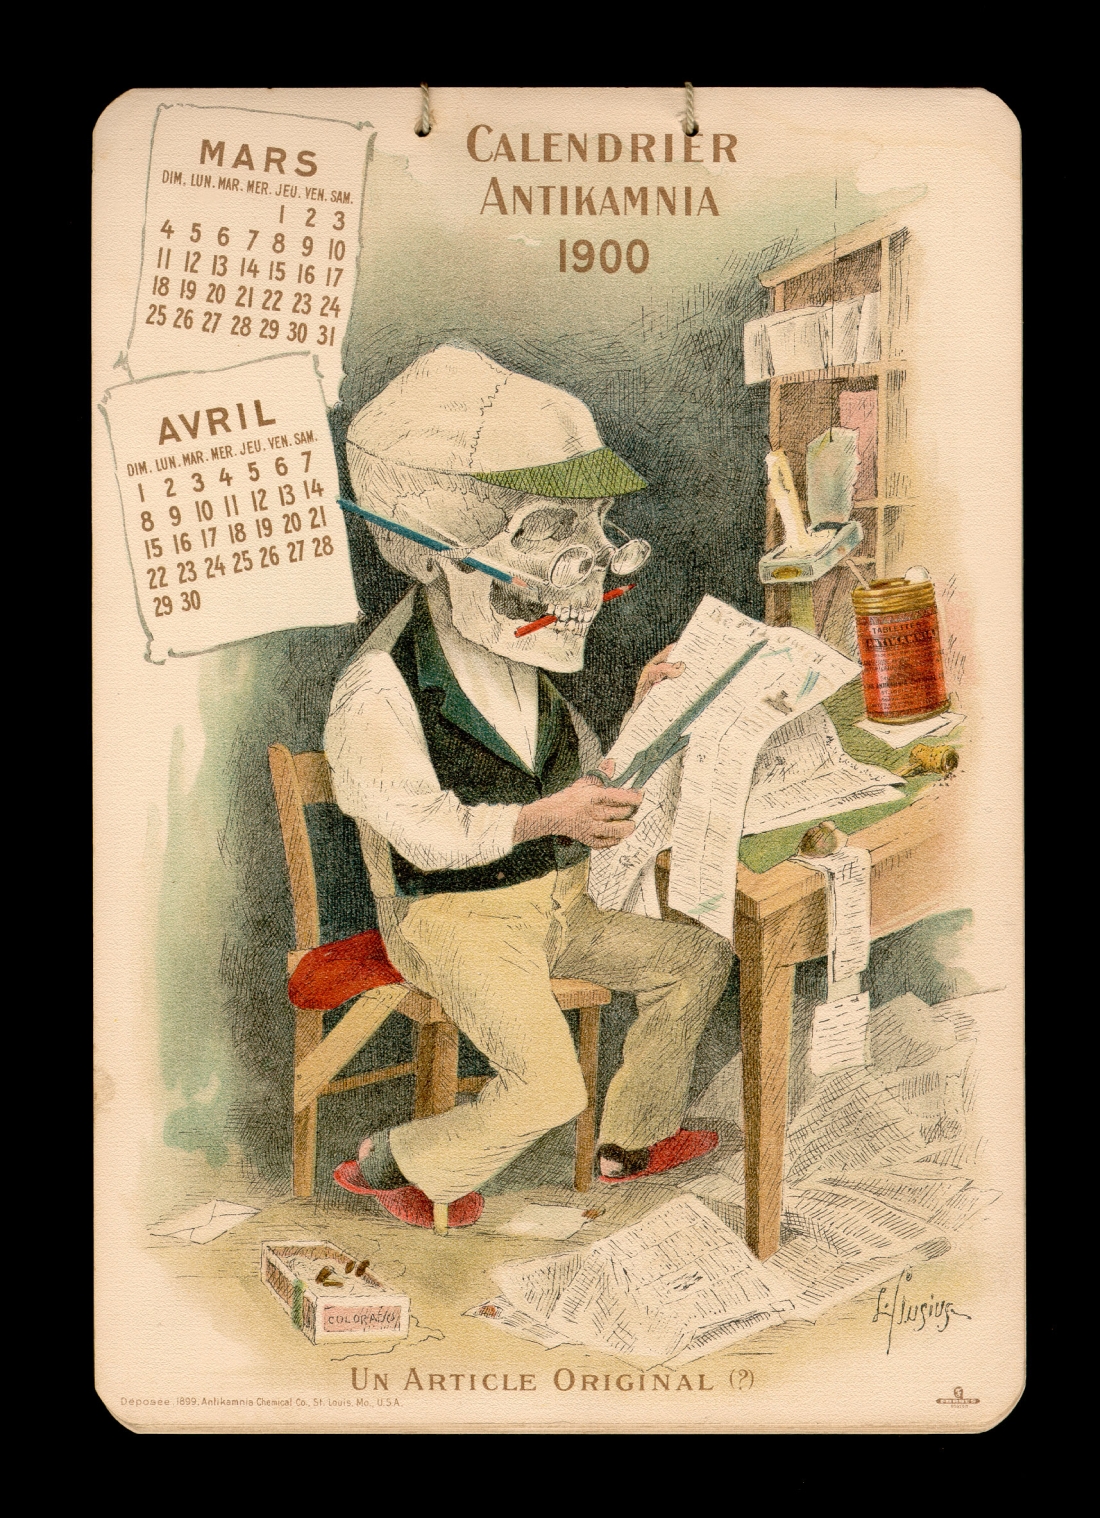 Antikamnia medical calendar 1900